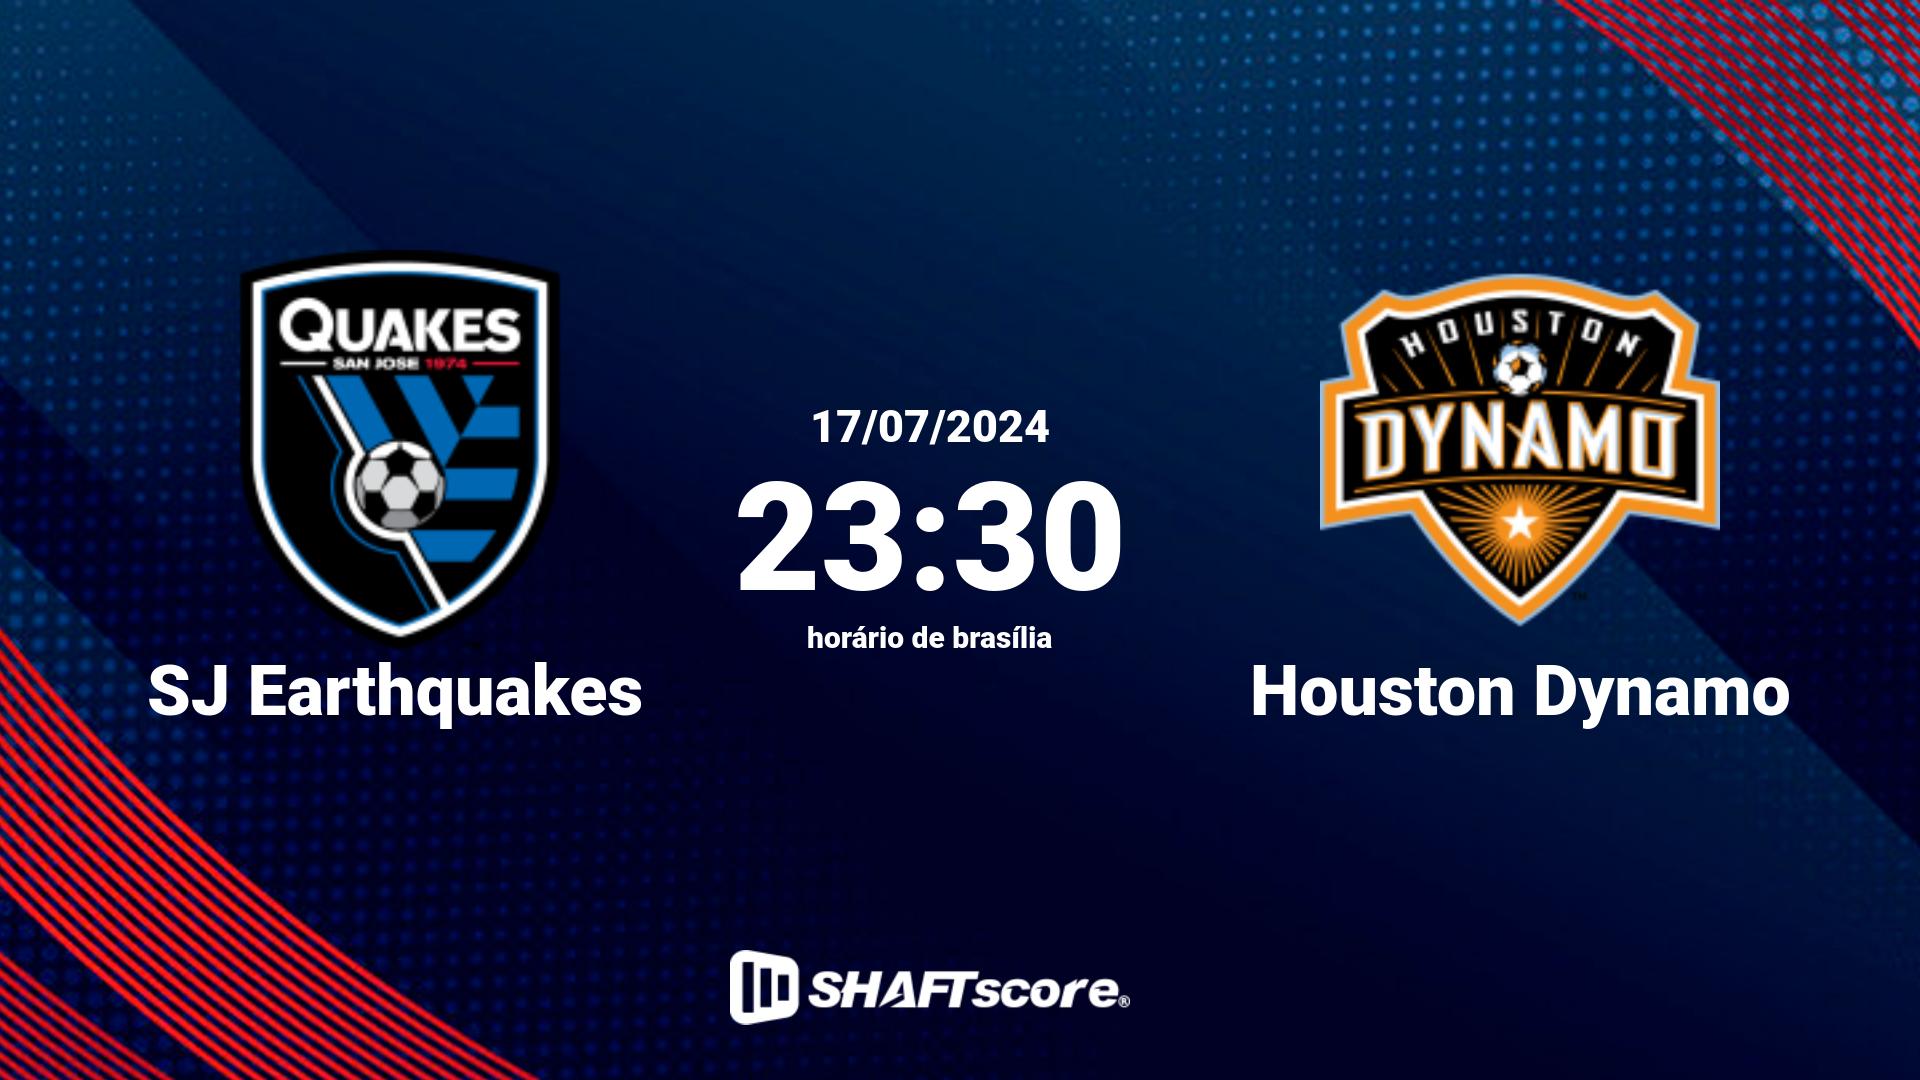 Estatísticas do jogo SJ Earthquakes vs Houston Dynamo 17.07 23:30